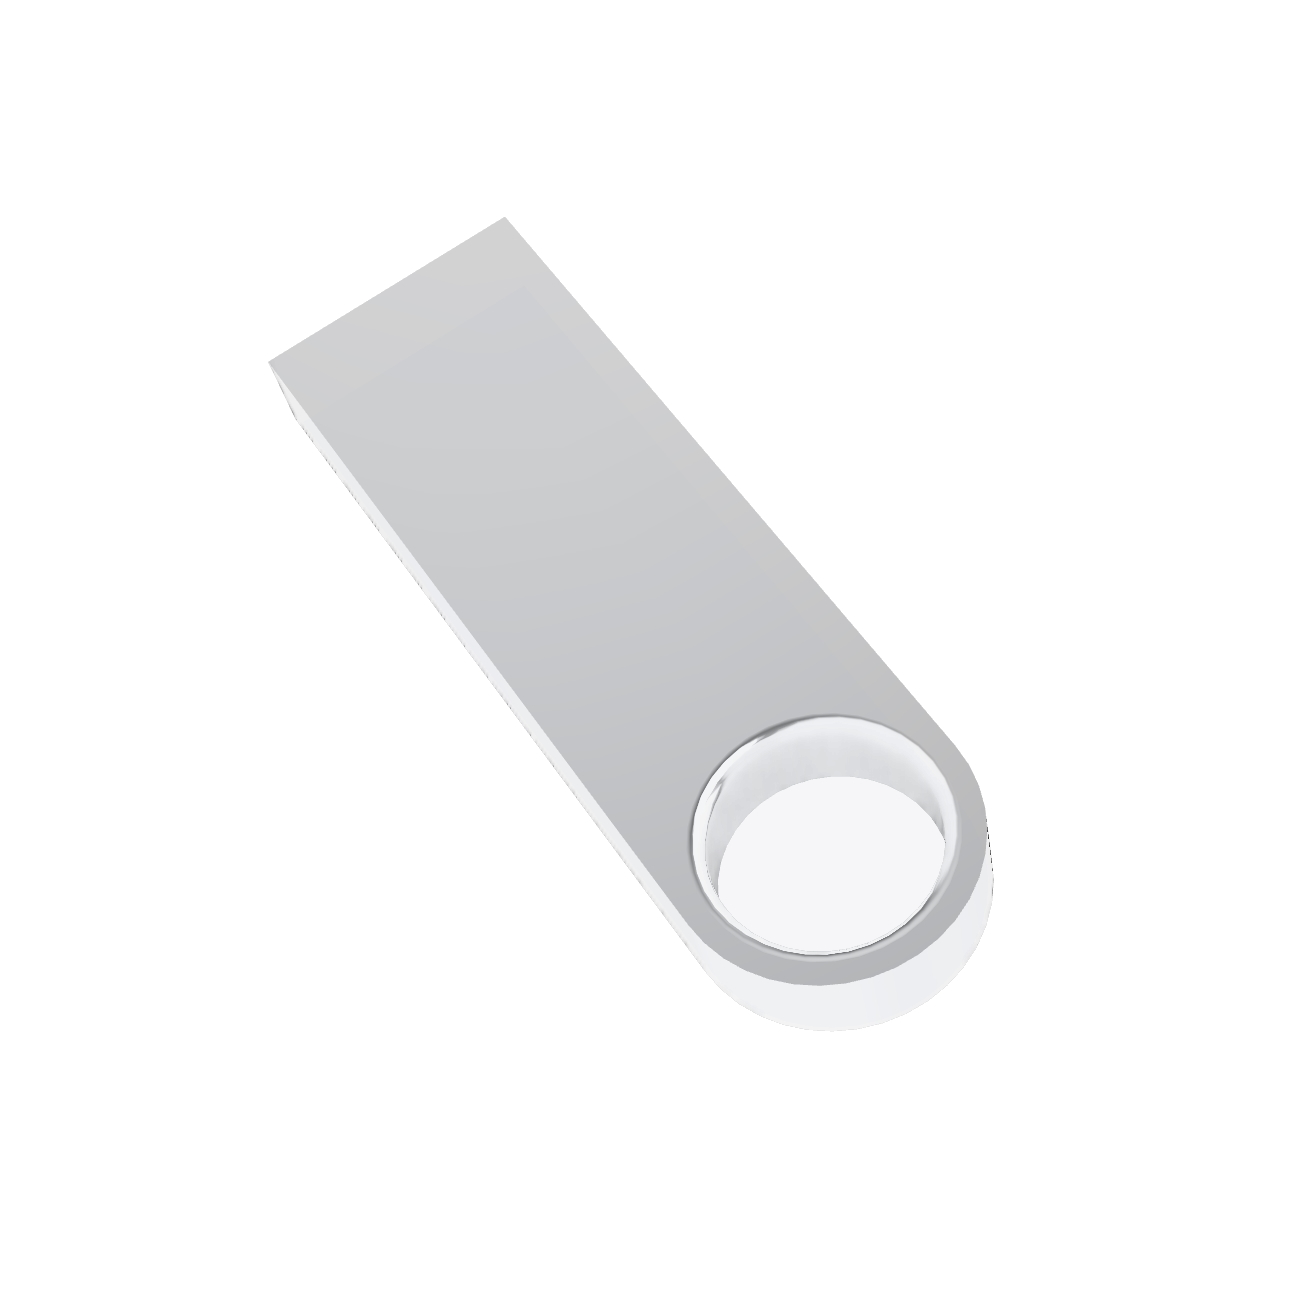 GERMANY ® GB) (Silber, USB-Stick USB SE09 16